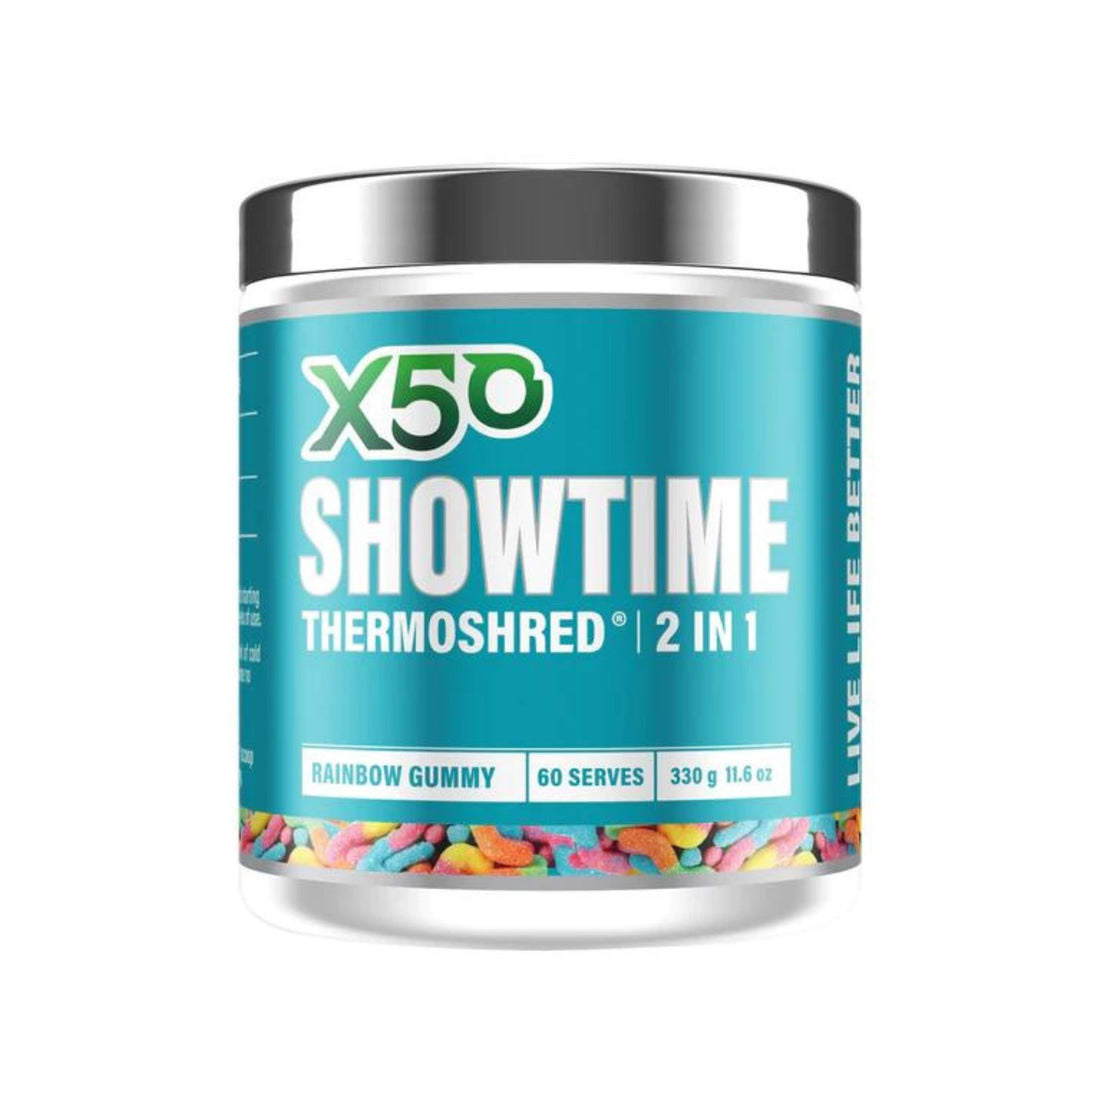 X50 Showtime